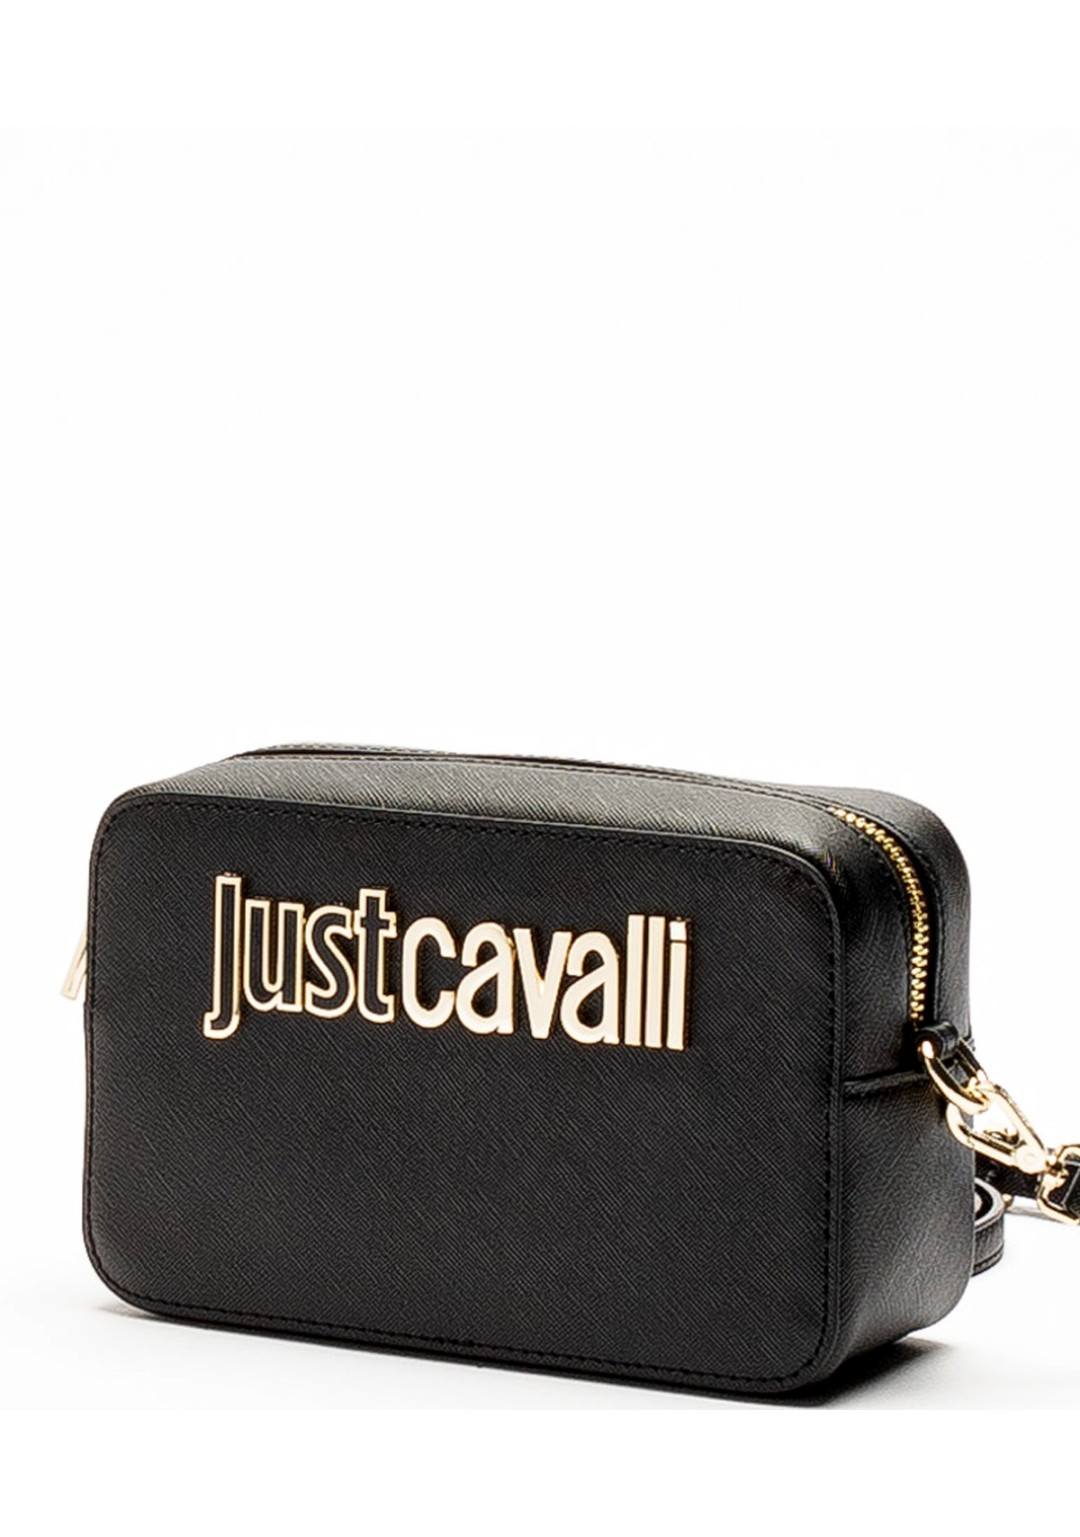 Just Cavalli - Tracollina Logo - Donna - 75RA4BB3 899